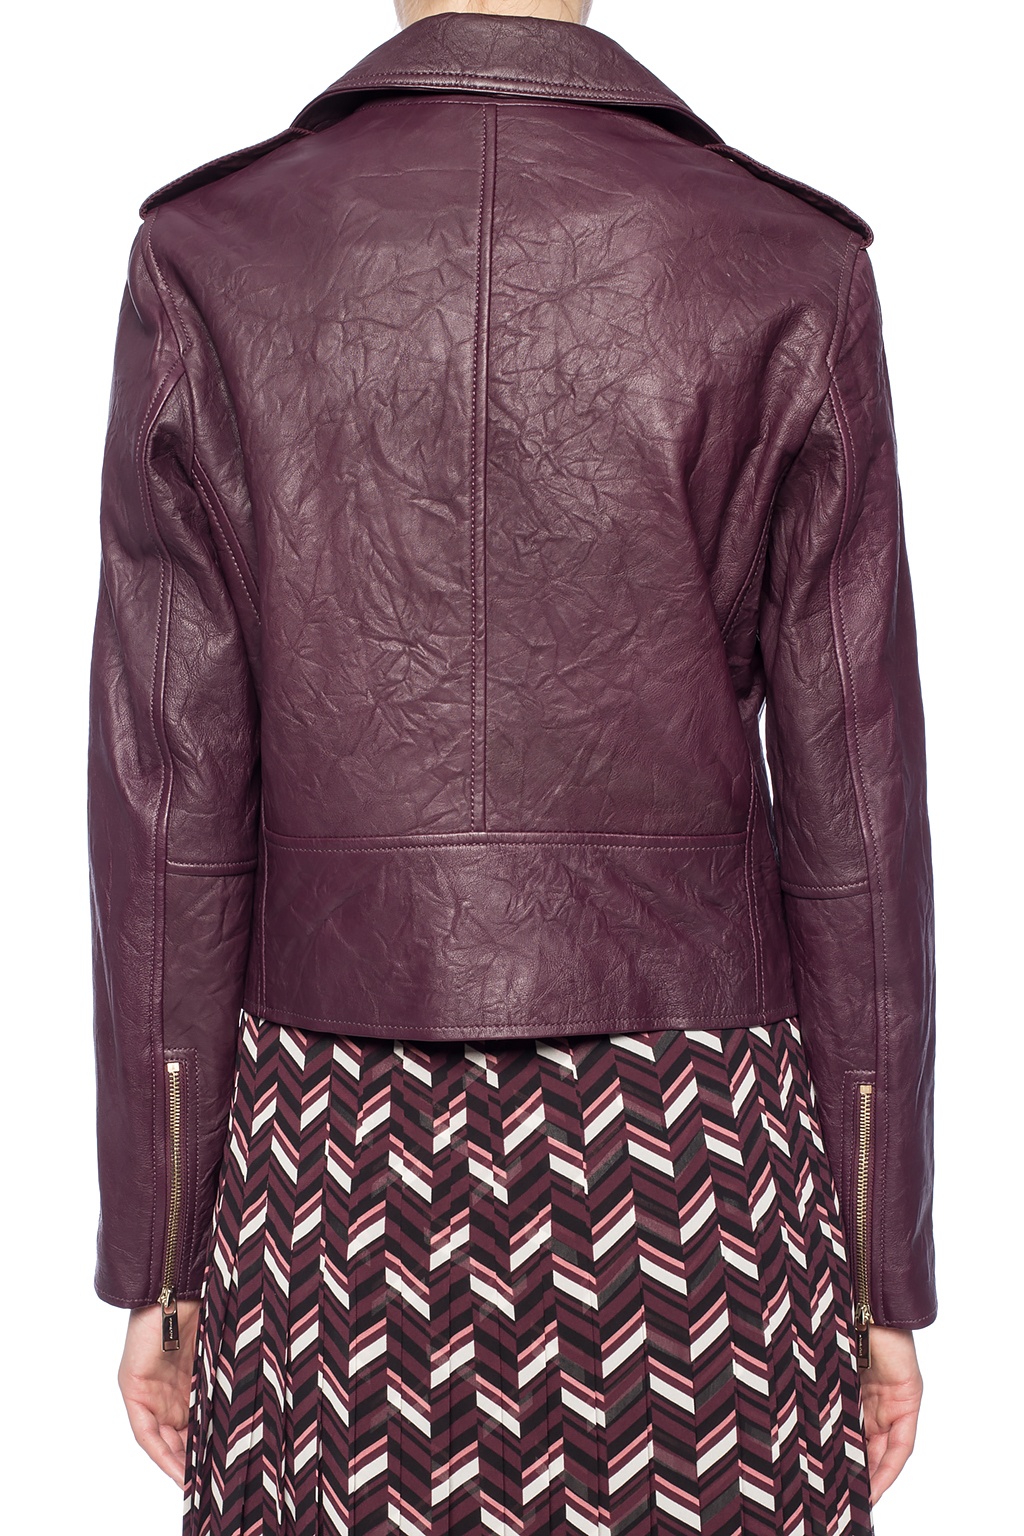 michael kors lavender leather jacket